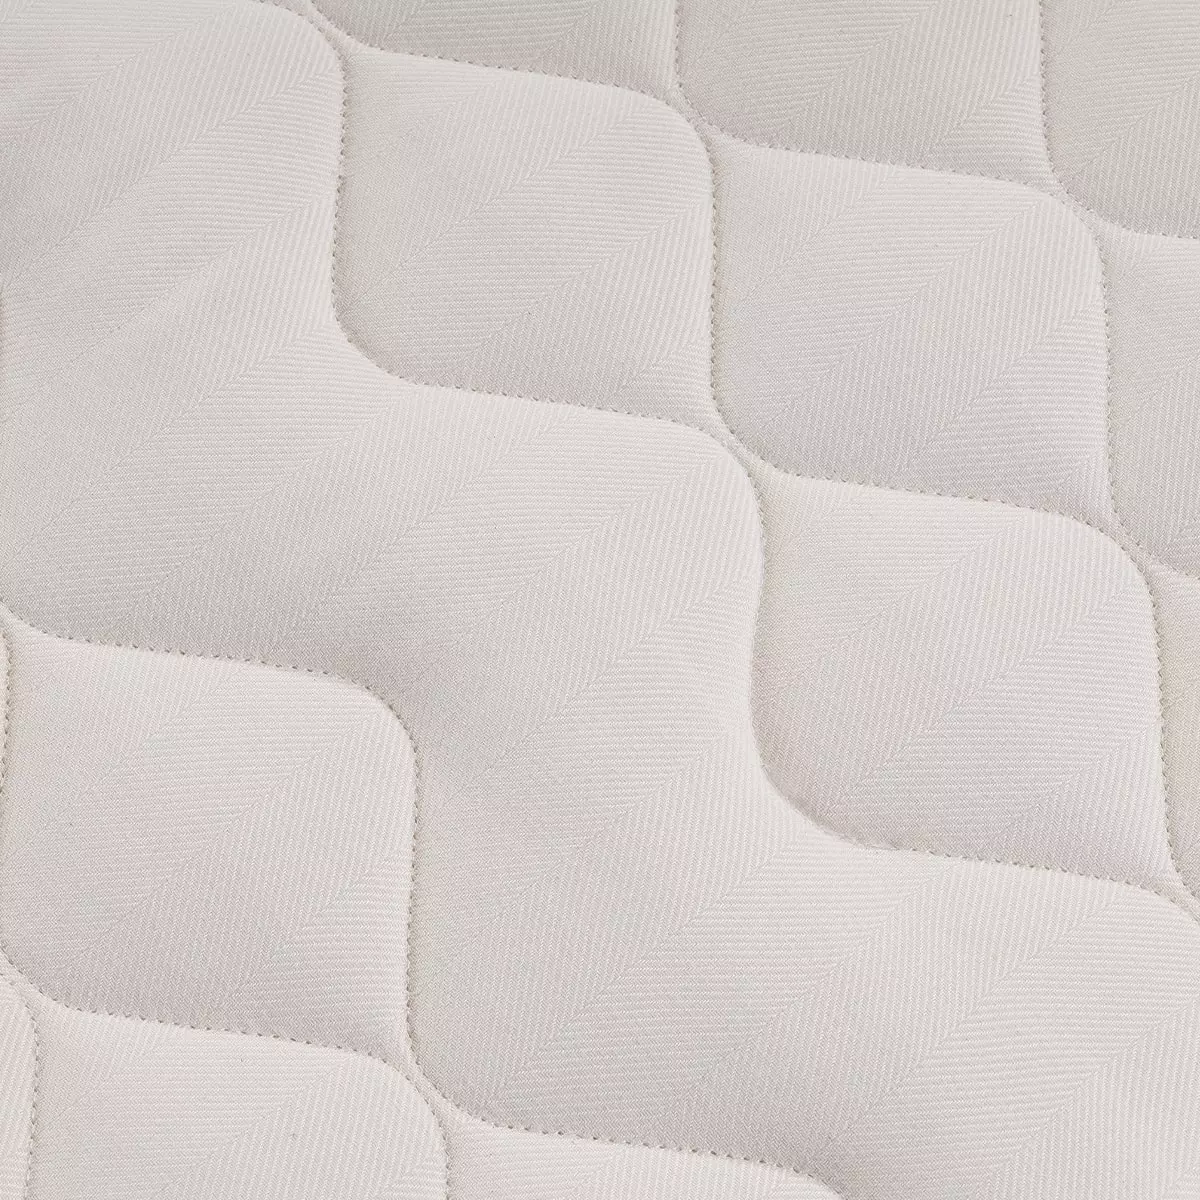 Hälsa Karlstad %100 Natural Latex Certificated Mattress with Organic Cotton Fabric